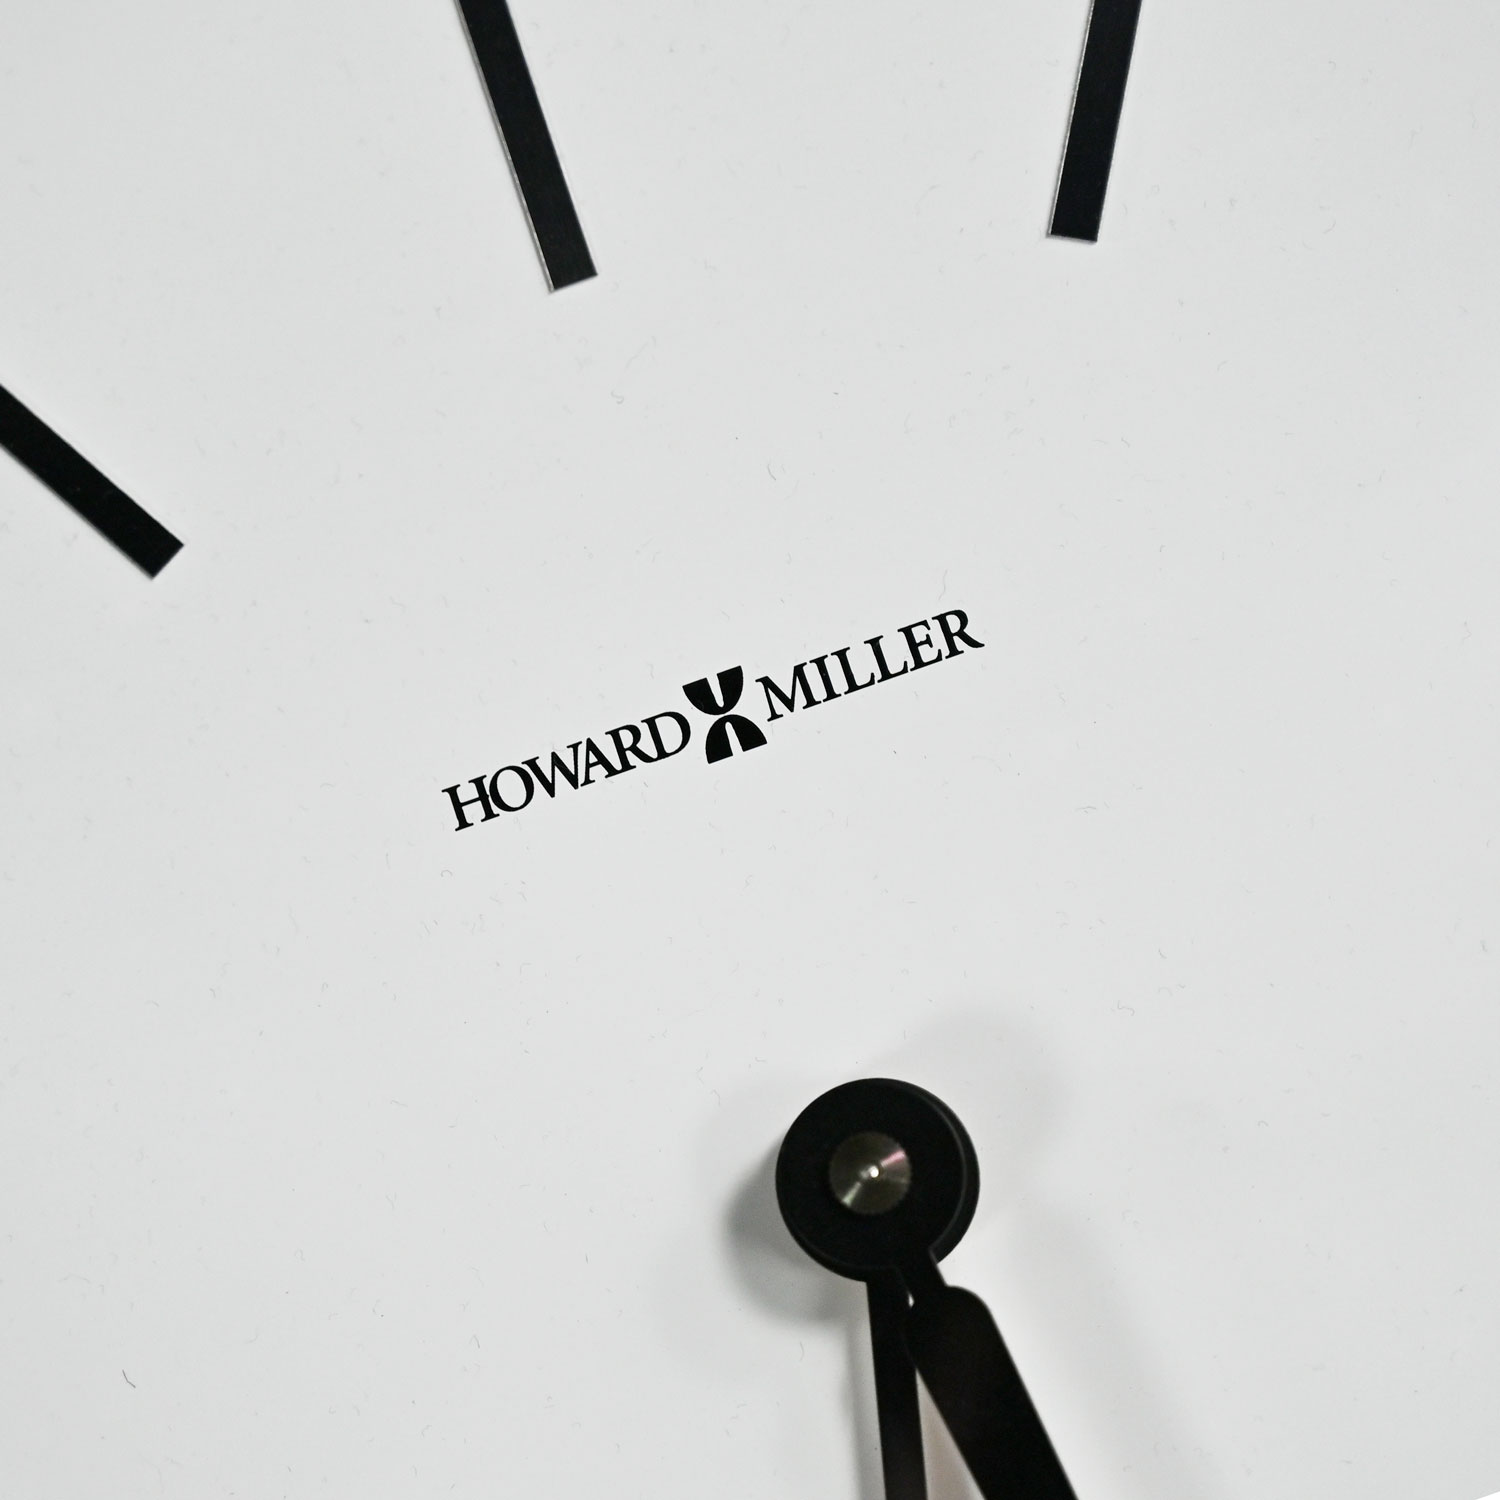 Howard Miller Quinten Model 611-216 Chrome & Espresso Floor Grandfather Clock Discontinued